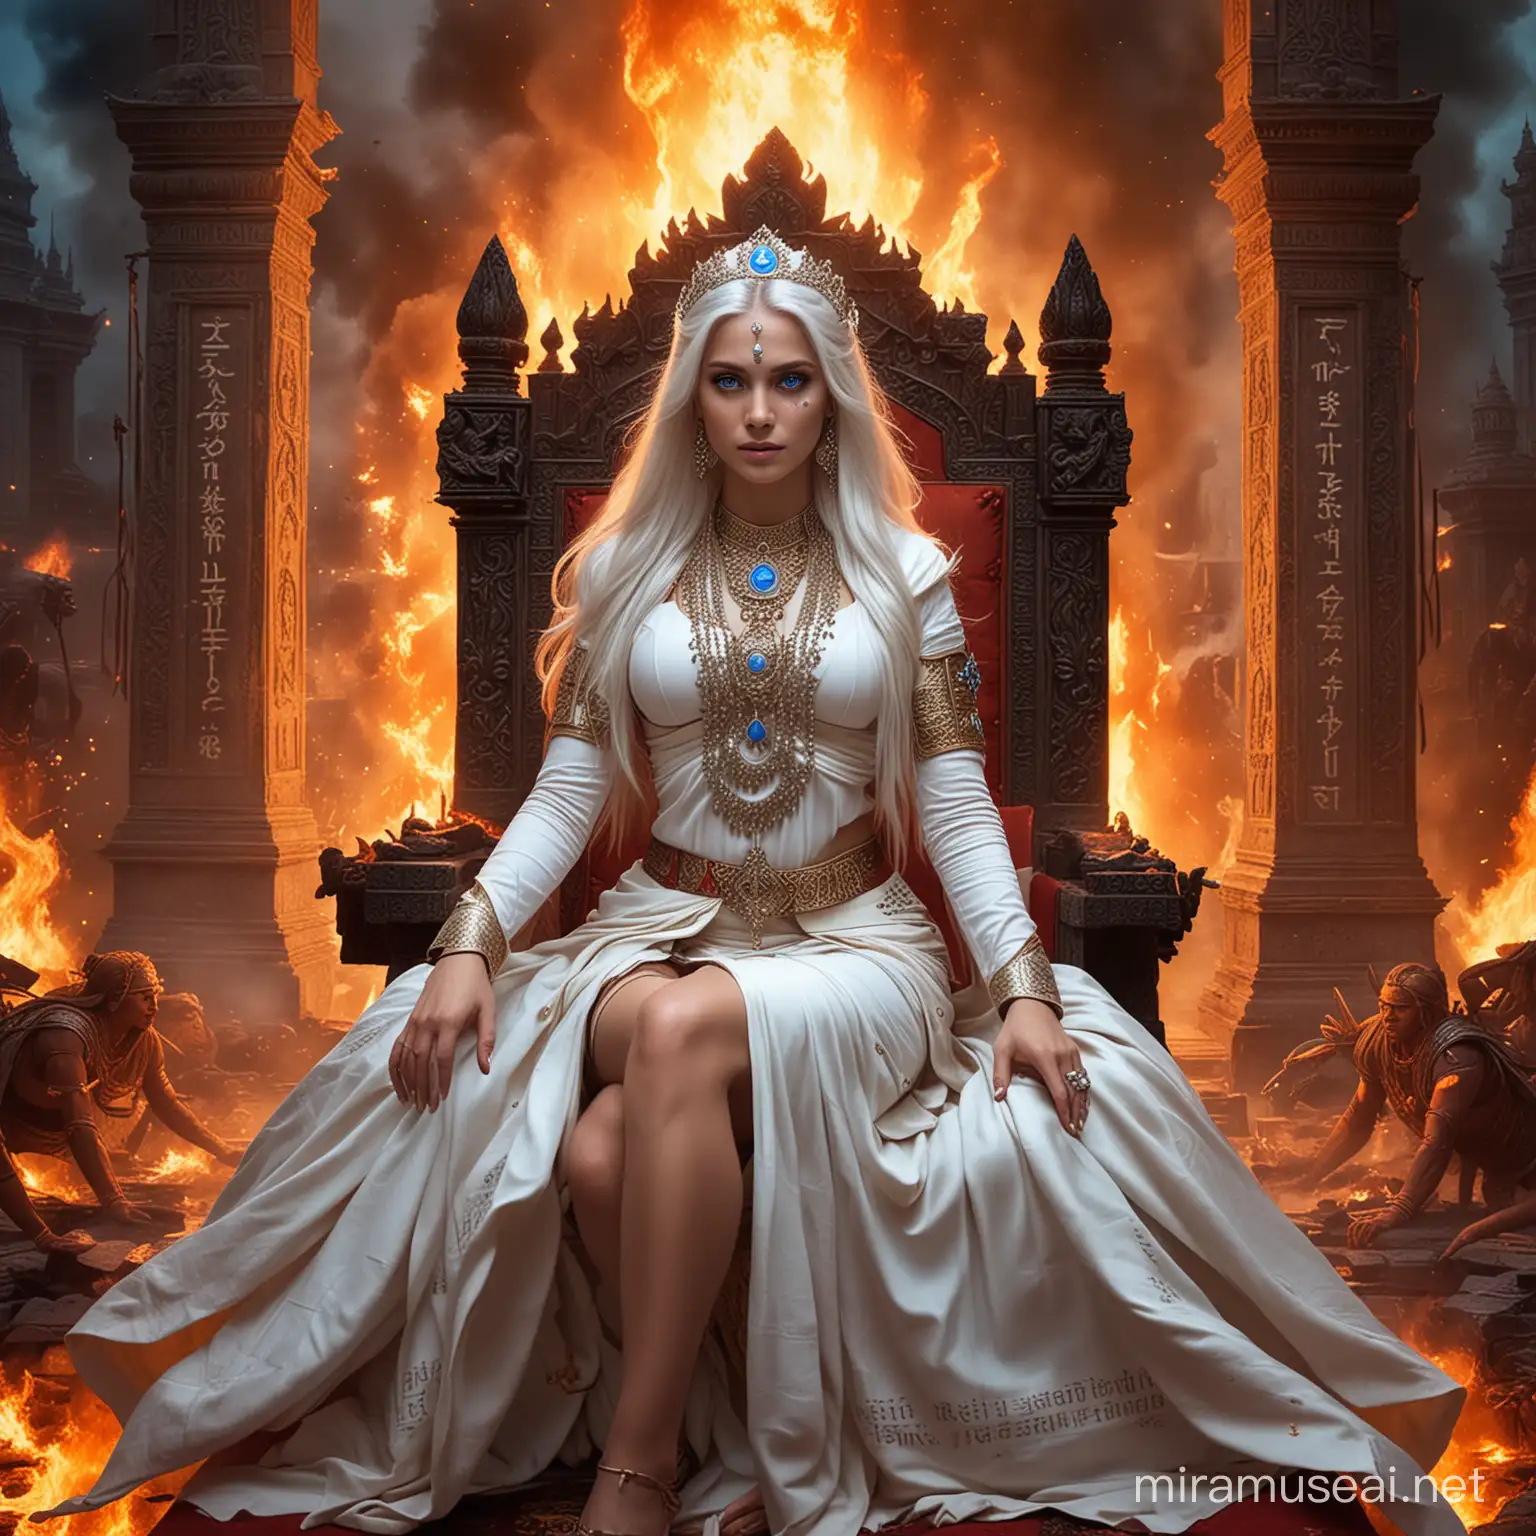 Kayashiel Empress Powerful Hindu Goddess Surrounded by Flames